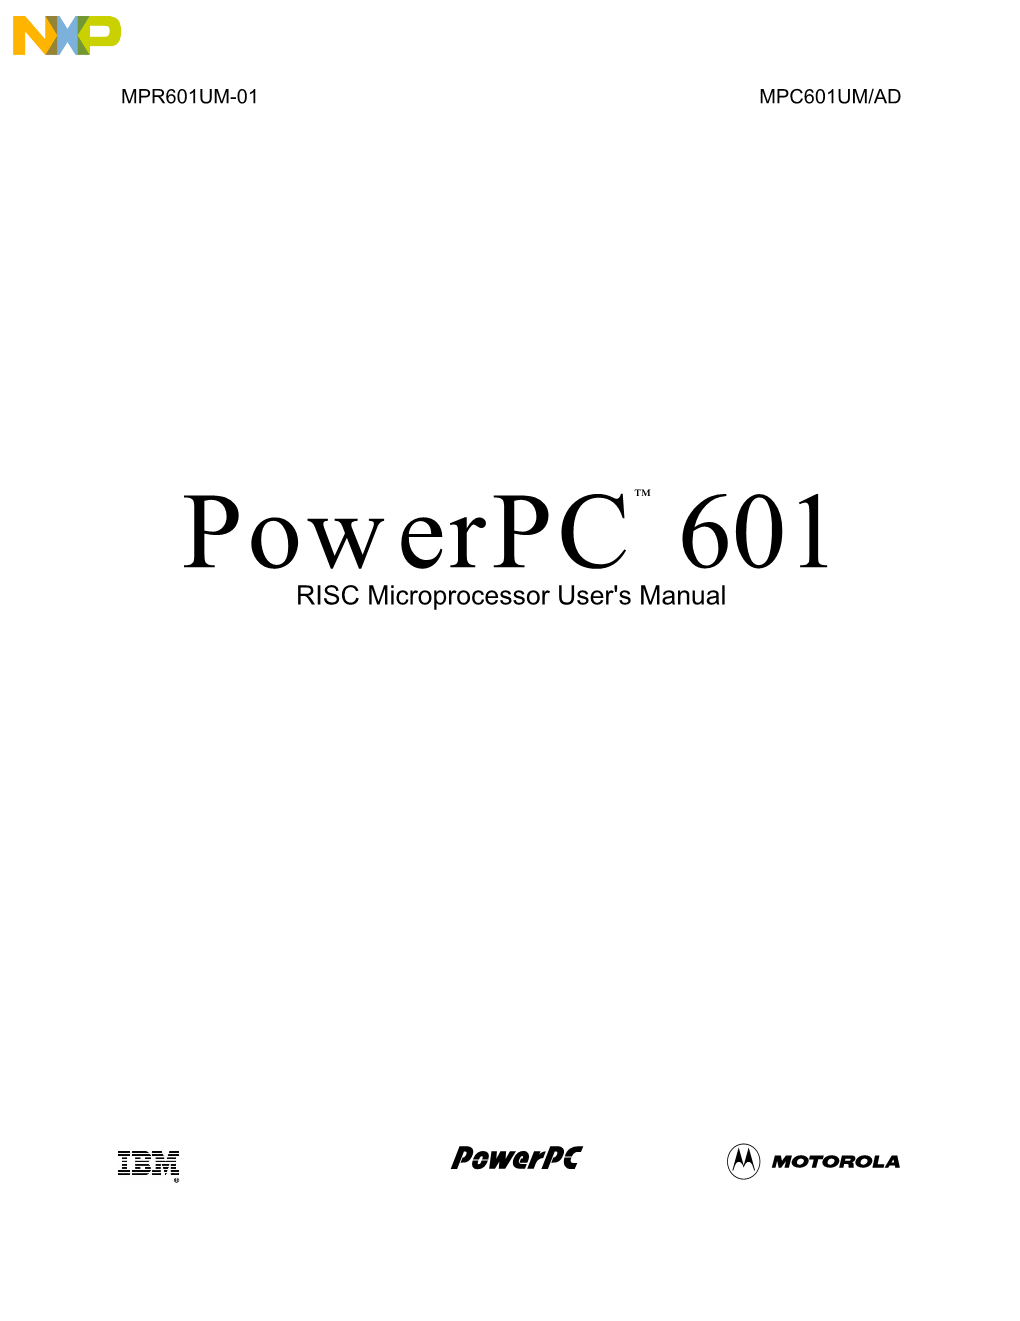 Powerpc 601 RISC Microprocessor Users Manual